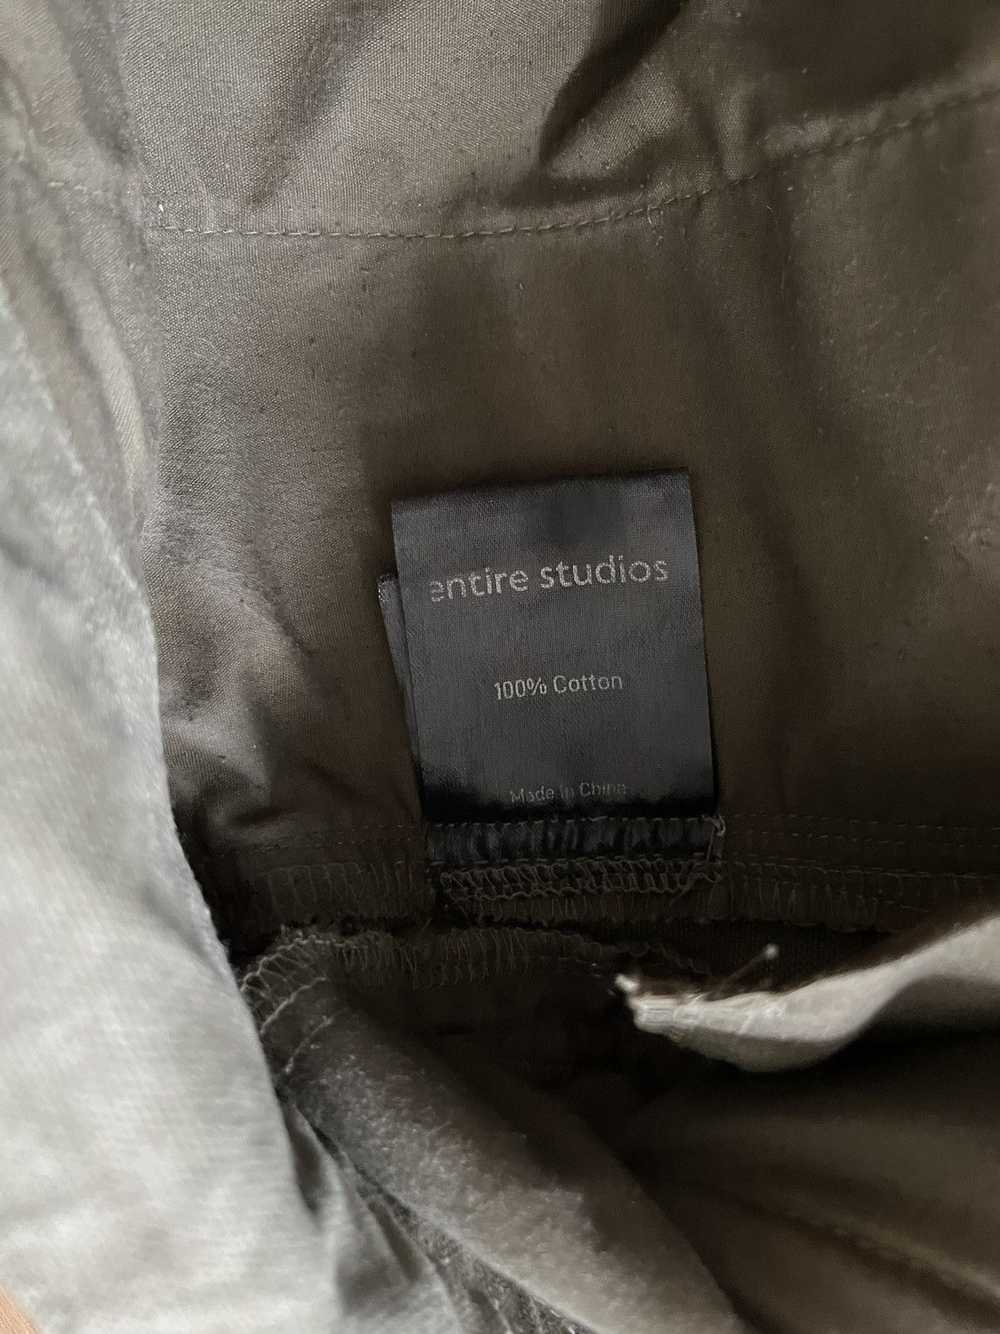 Entire Studios Green Cotton Cargo Pants - image 5